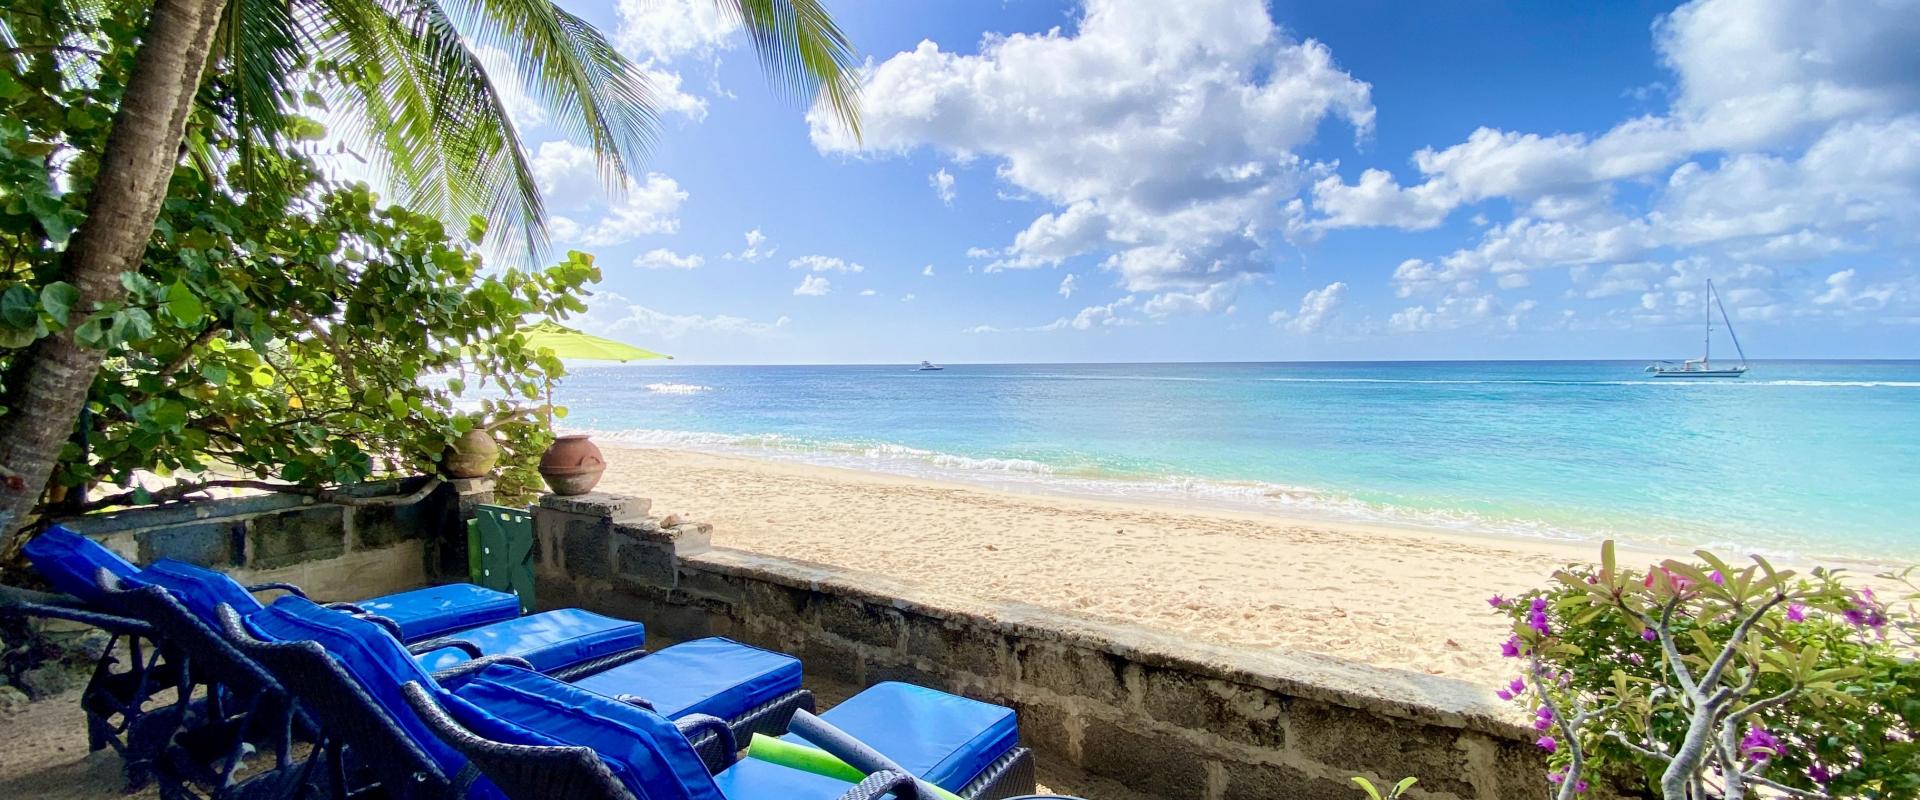 Beachfront Barbados Villa Rental Seascape Beach View with Loungers